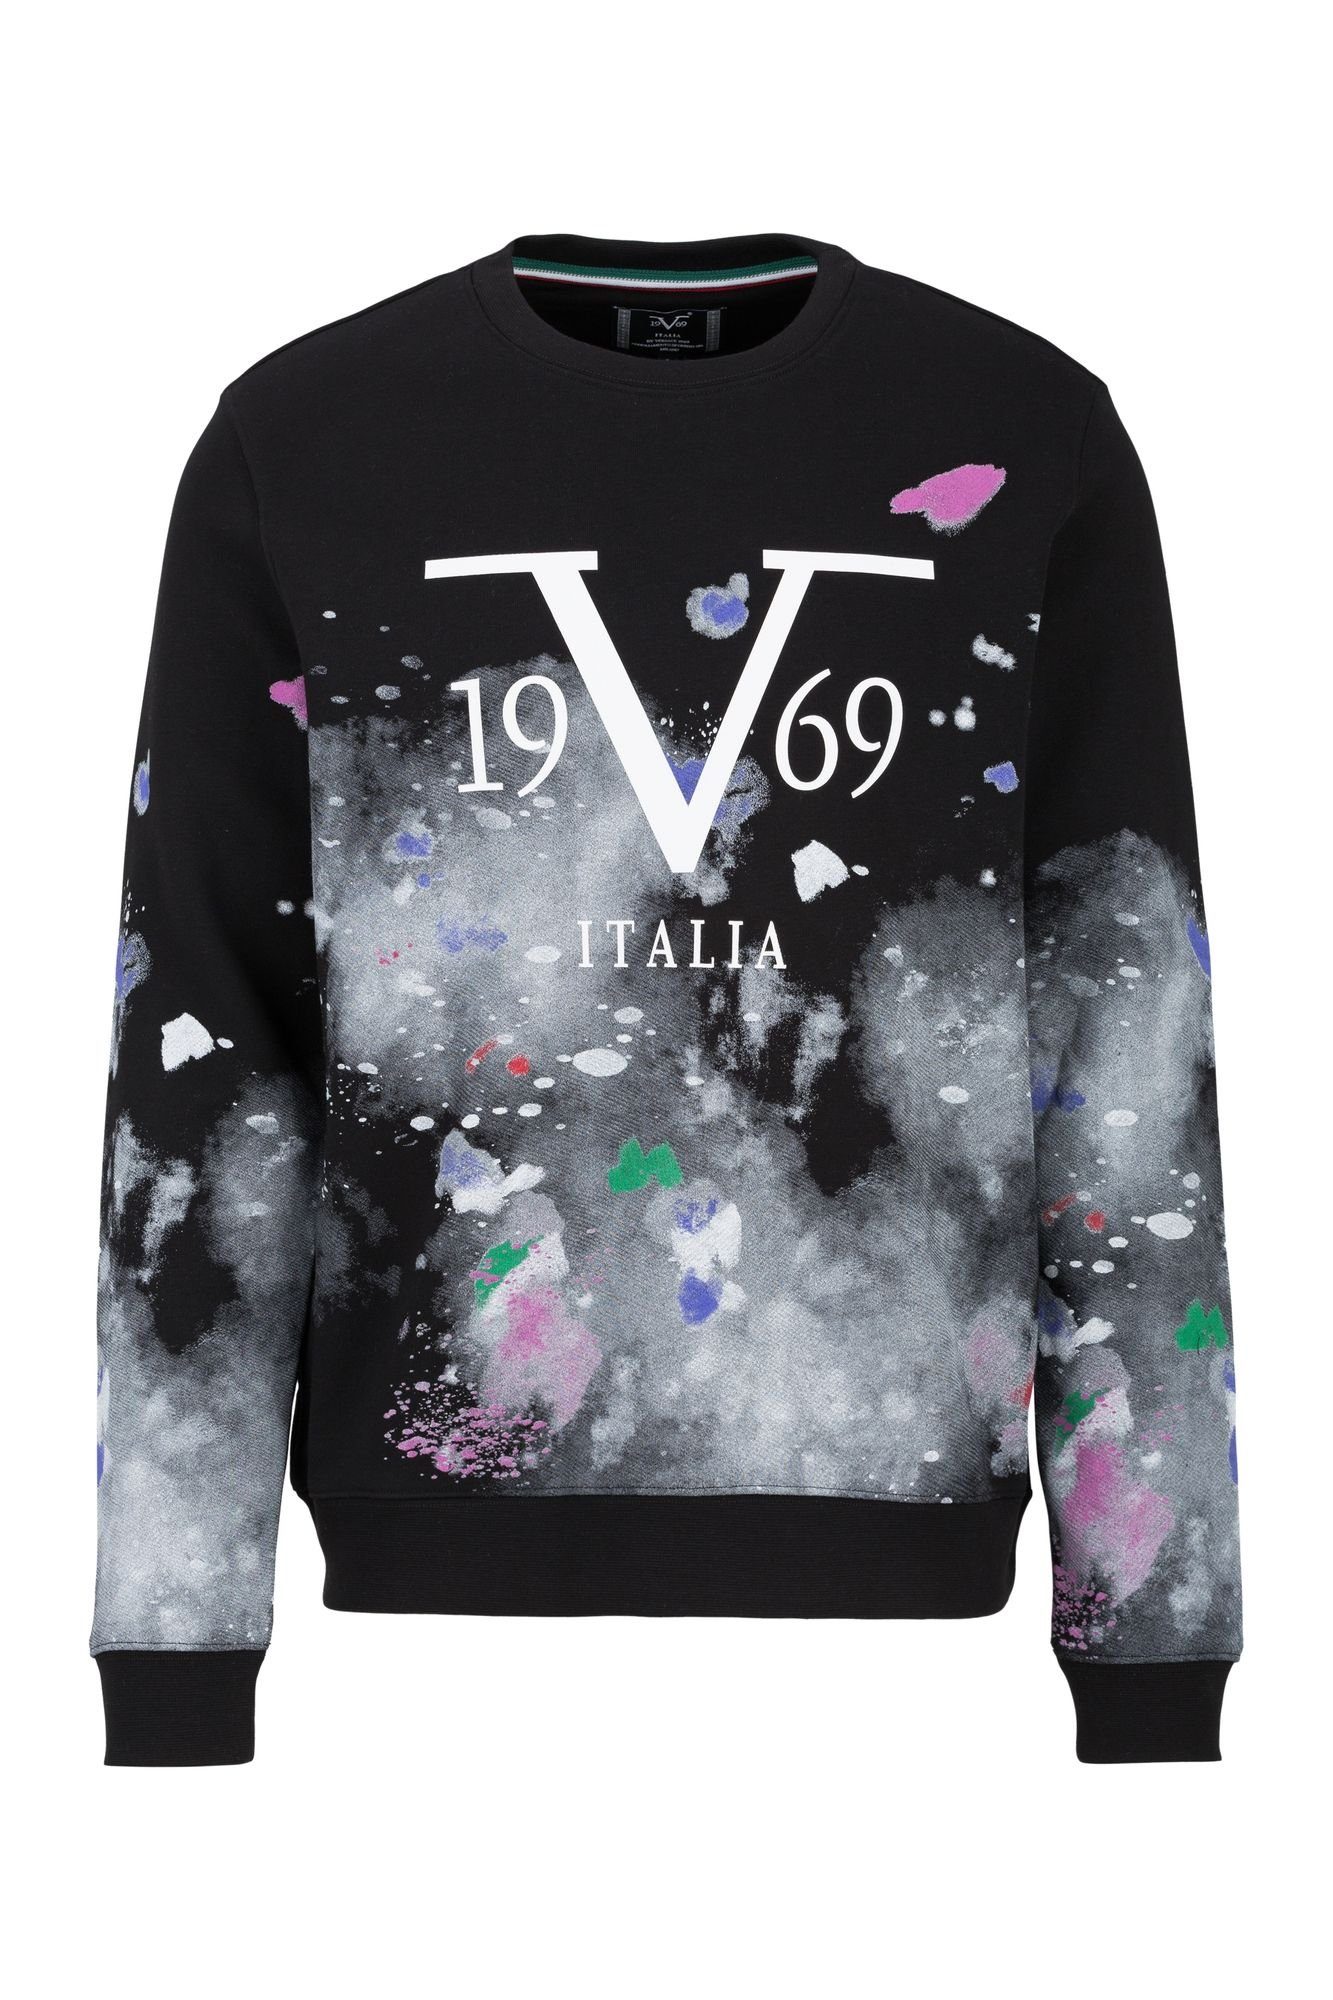 19V69 Italia by Versace Sweatshirt by Versace Sportivo SRL - Luan